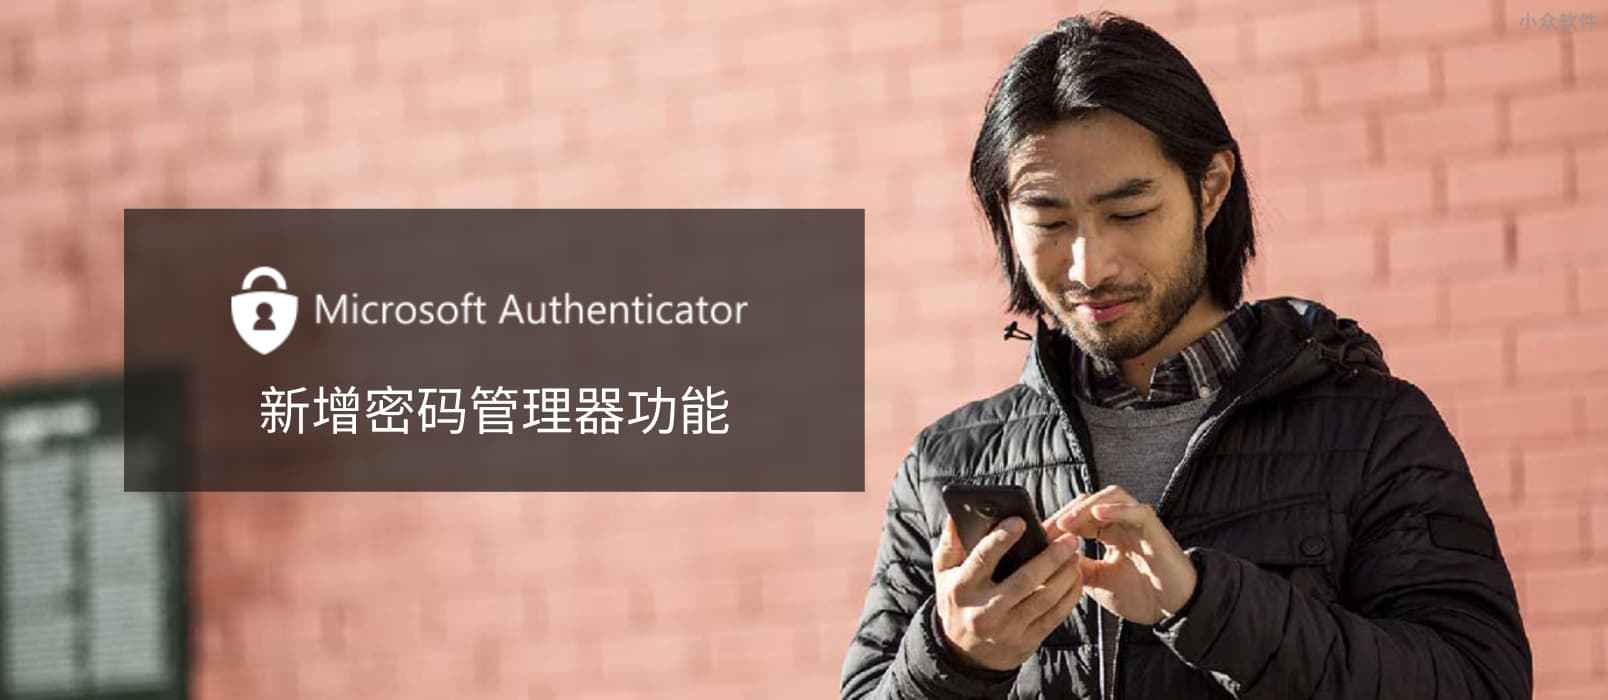 Microsoft Authenticator 密码管理器 – 从 Edge 同步密码，支持在 iPhone、Android 设备及 Chrome 中自动填充密码